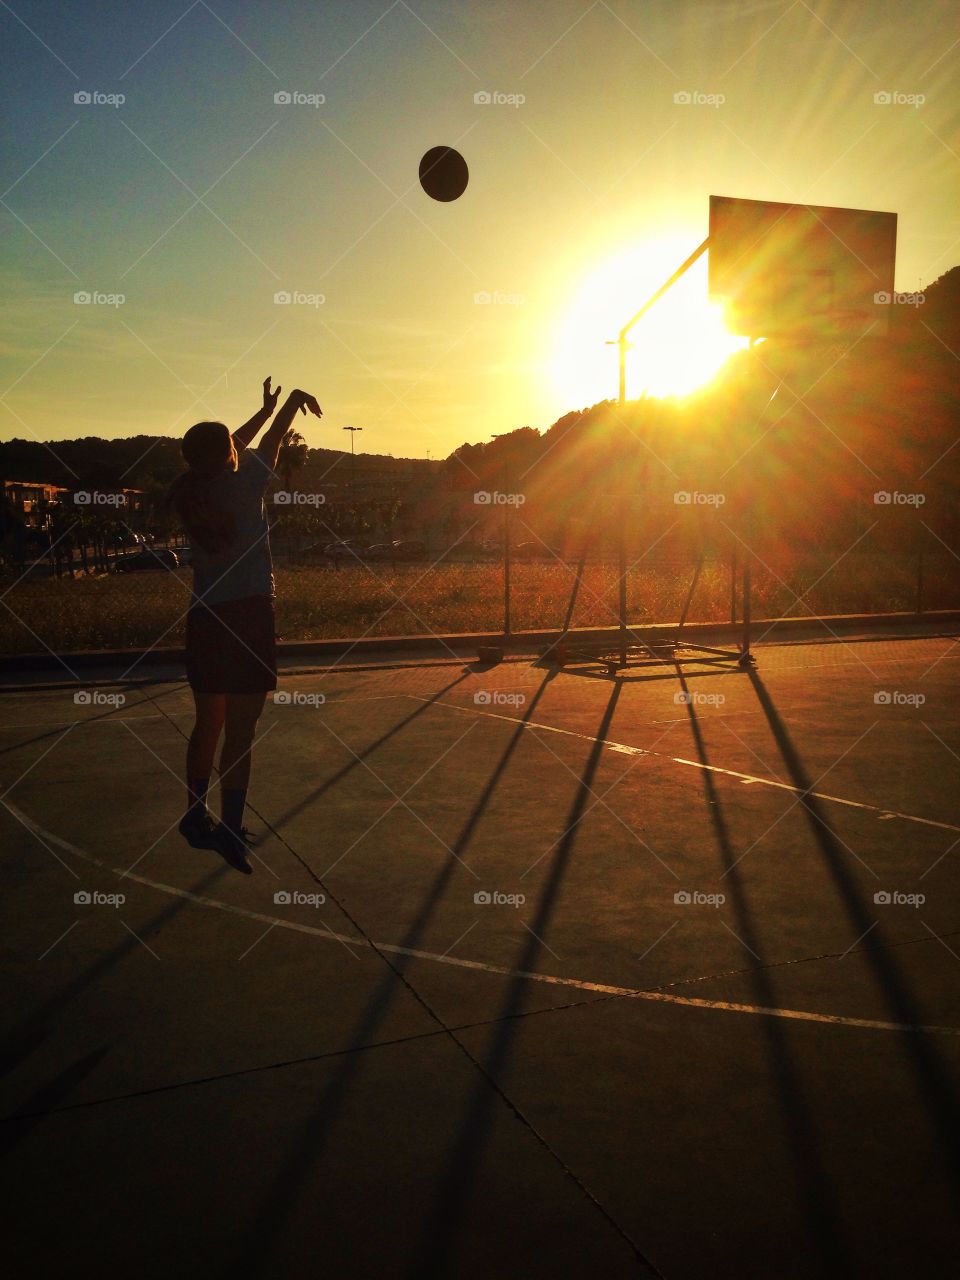 Basketball at the sunset. Triple shot, a ball & the setting sun